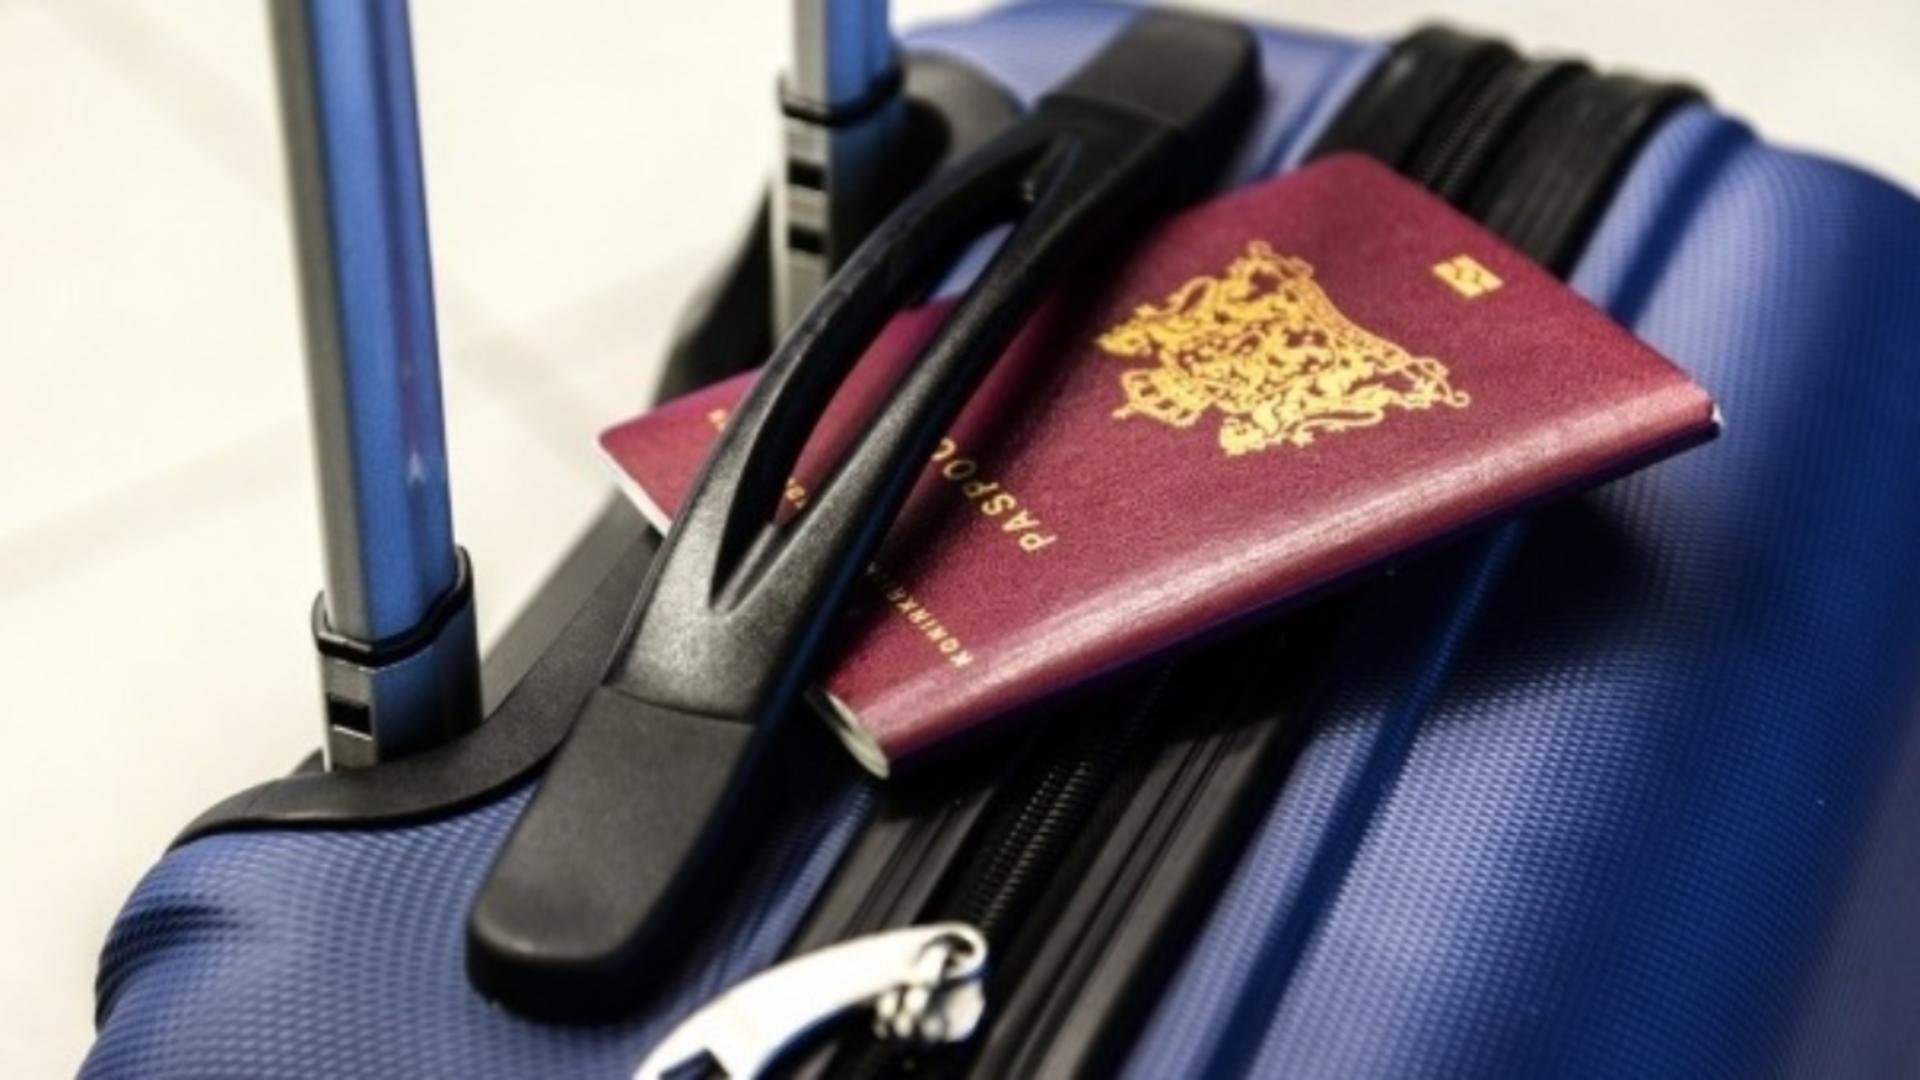 pasaport valiza poza buna pentru calatorie 726034b694